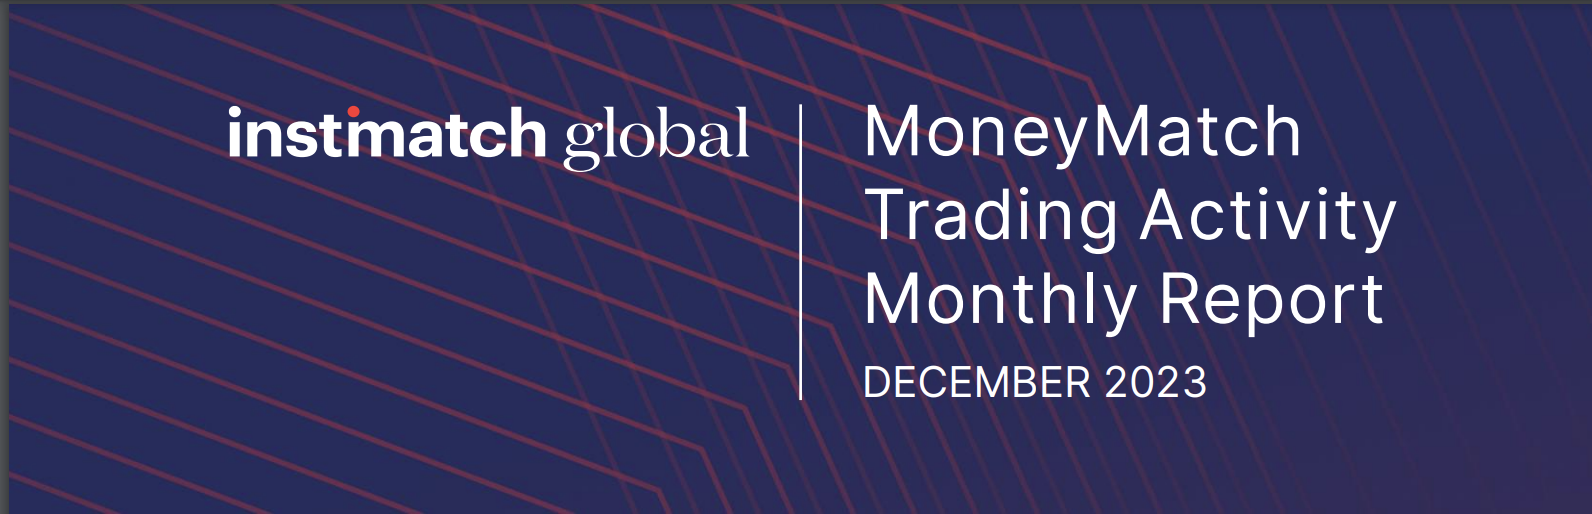 MoneyMatch Trading Activity Monthly Report – DECEMBER 2023